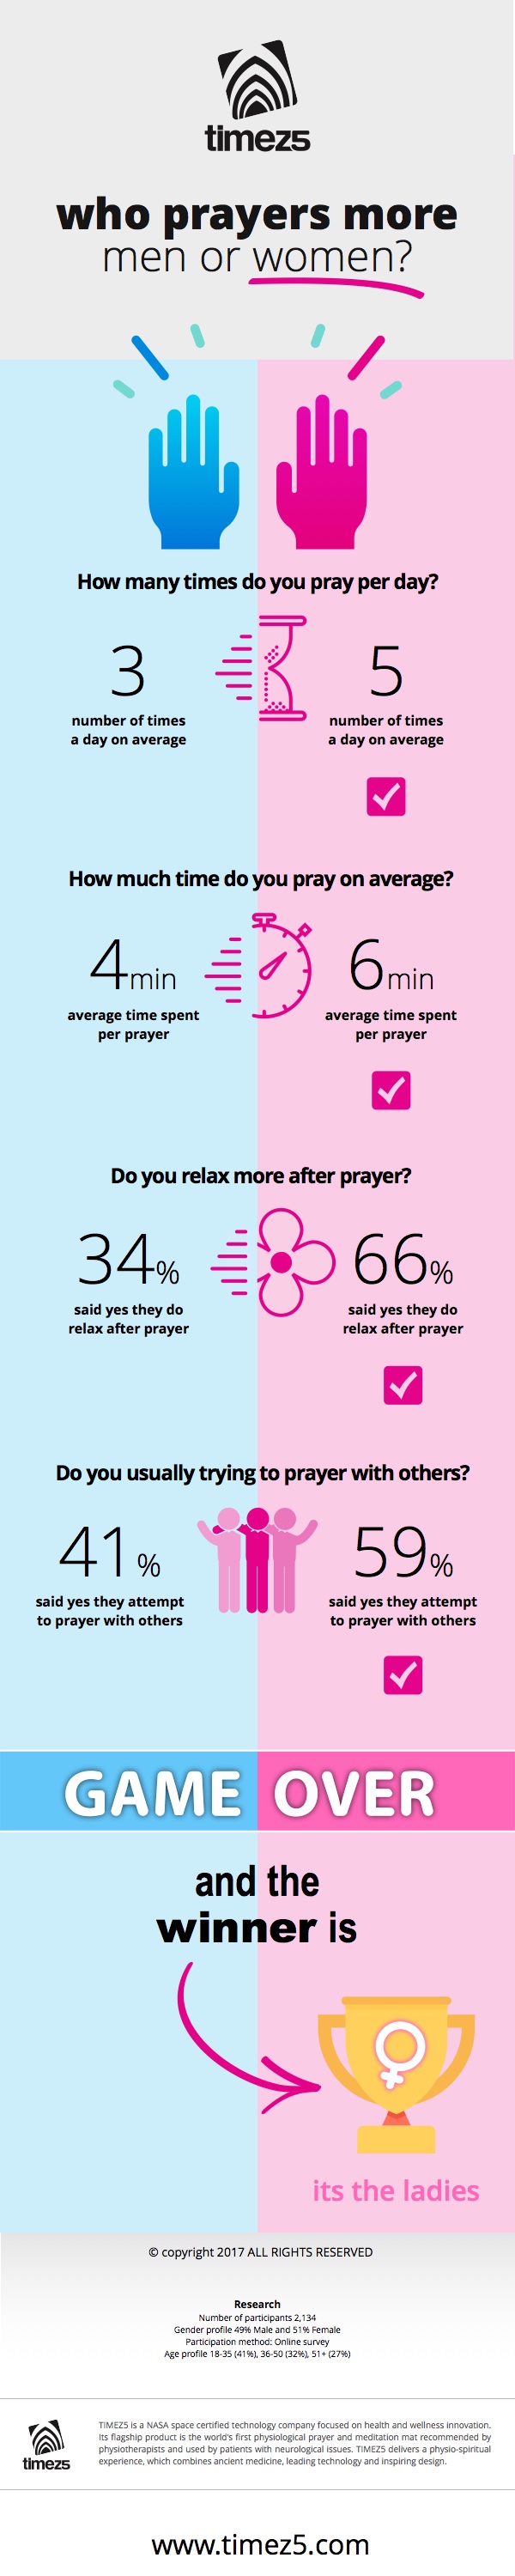 Muslim Women consumers, Who prayers more men or women?